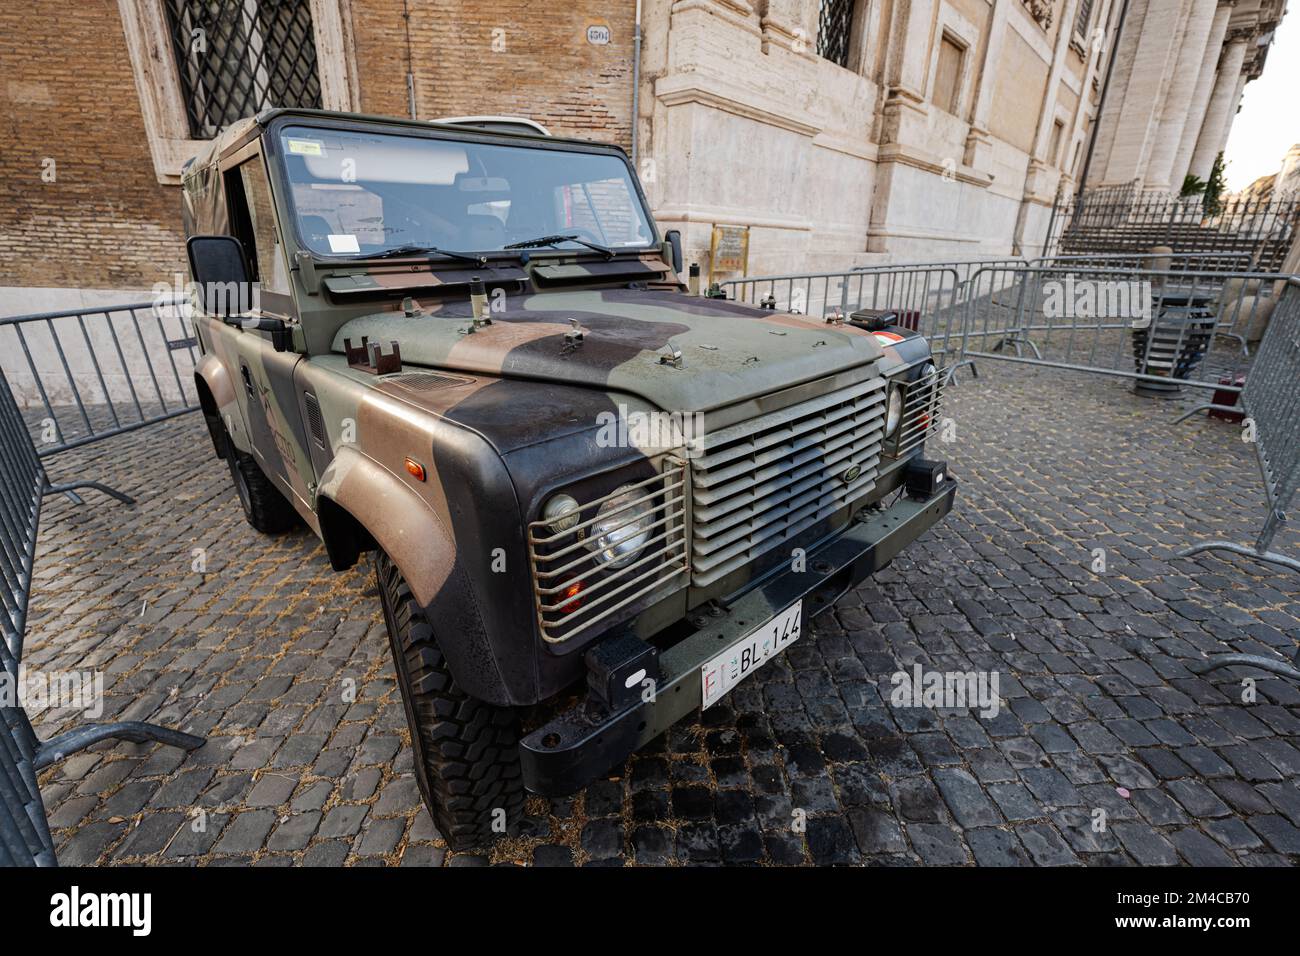 Rome, Italy - July 27, 2022: Italian Armed Forces, Esercito Italiano. Land Rover Defender army truck in Rome, Italy. Stock Photo